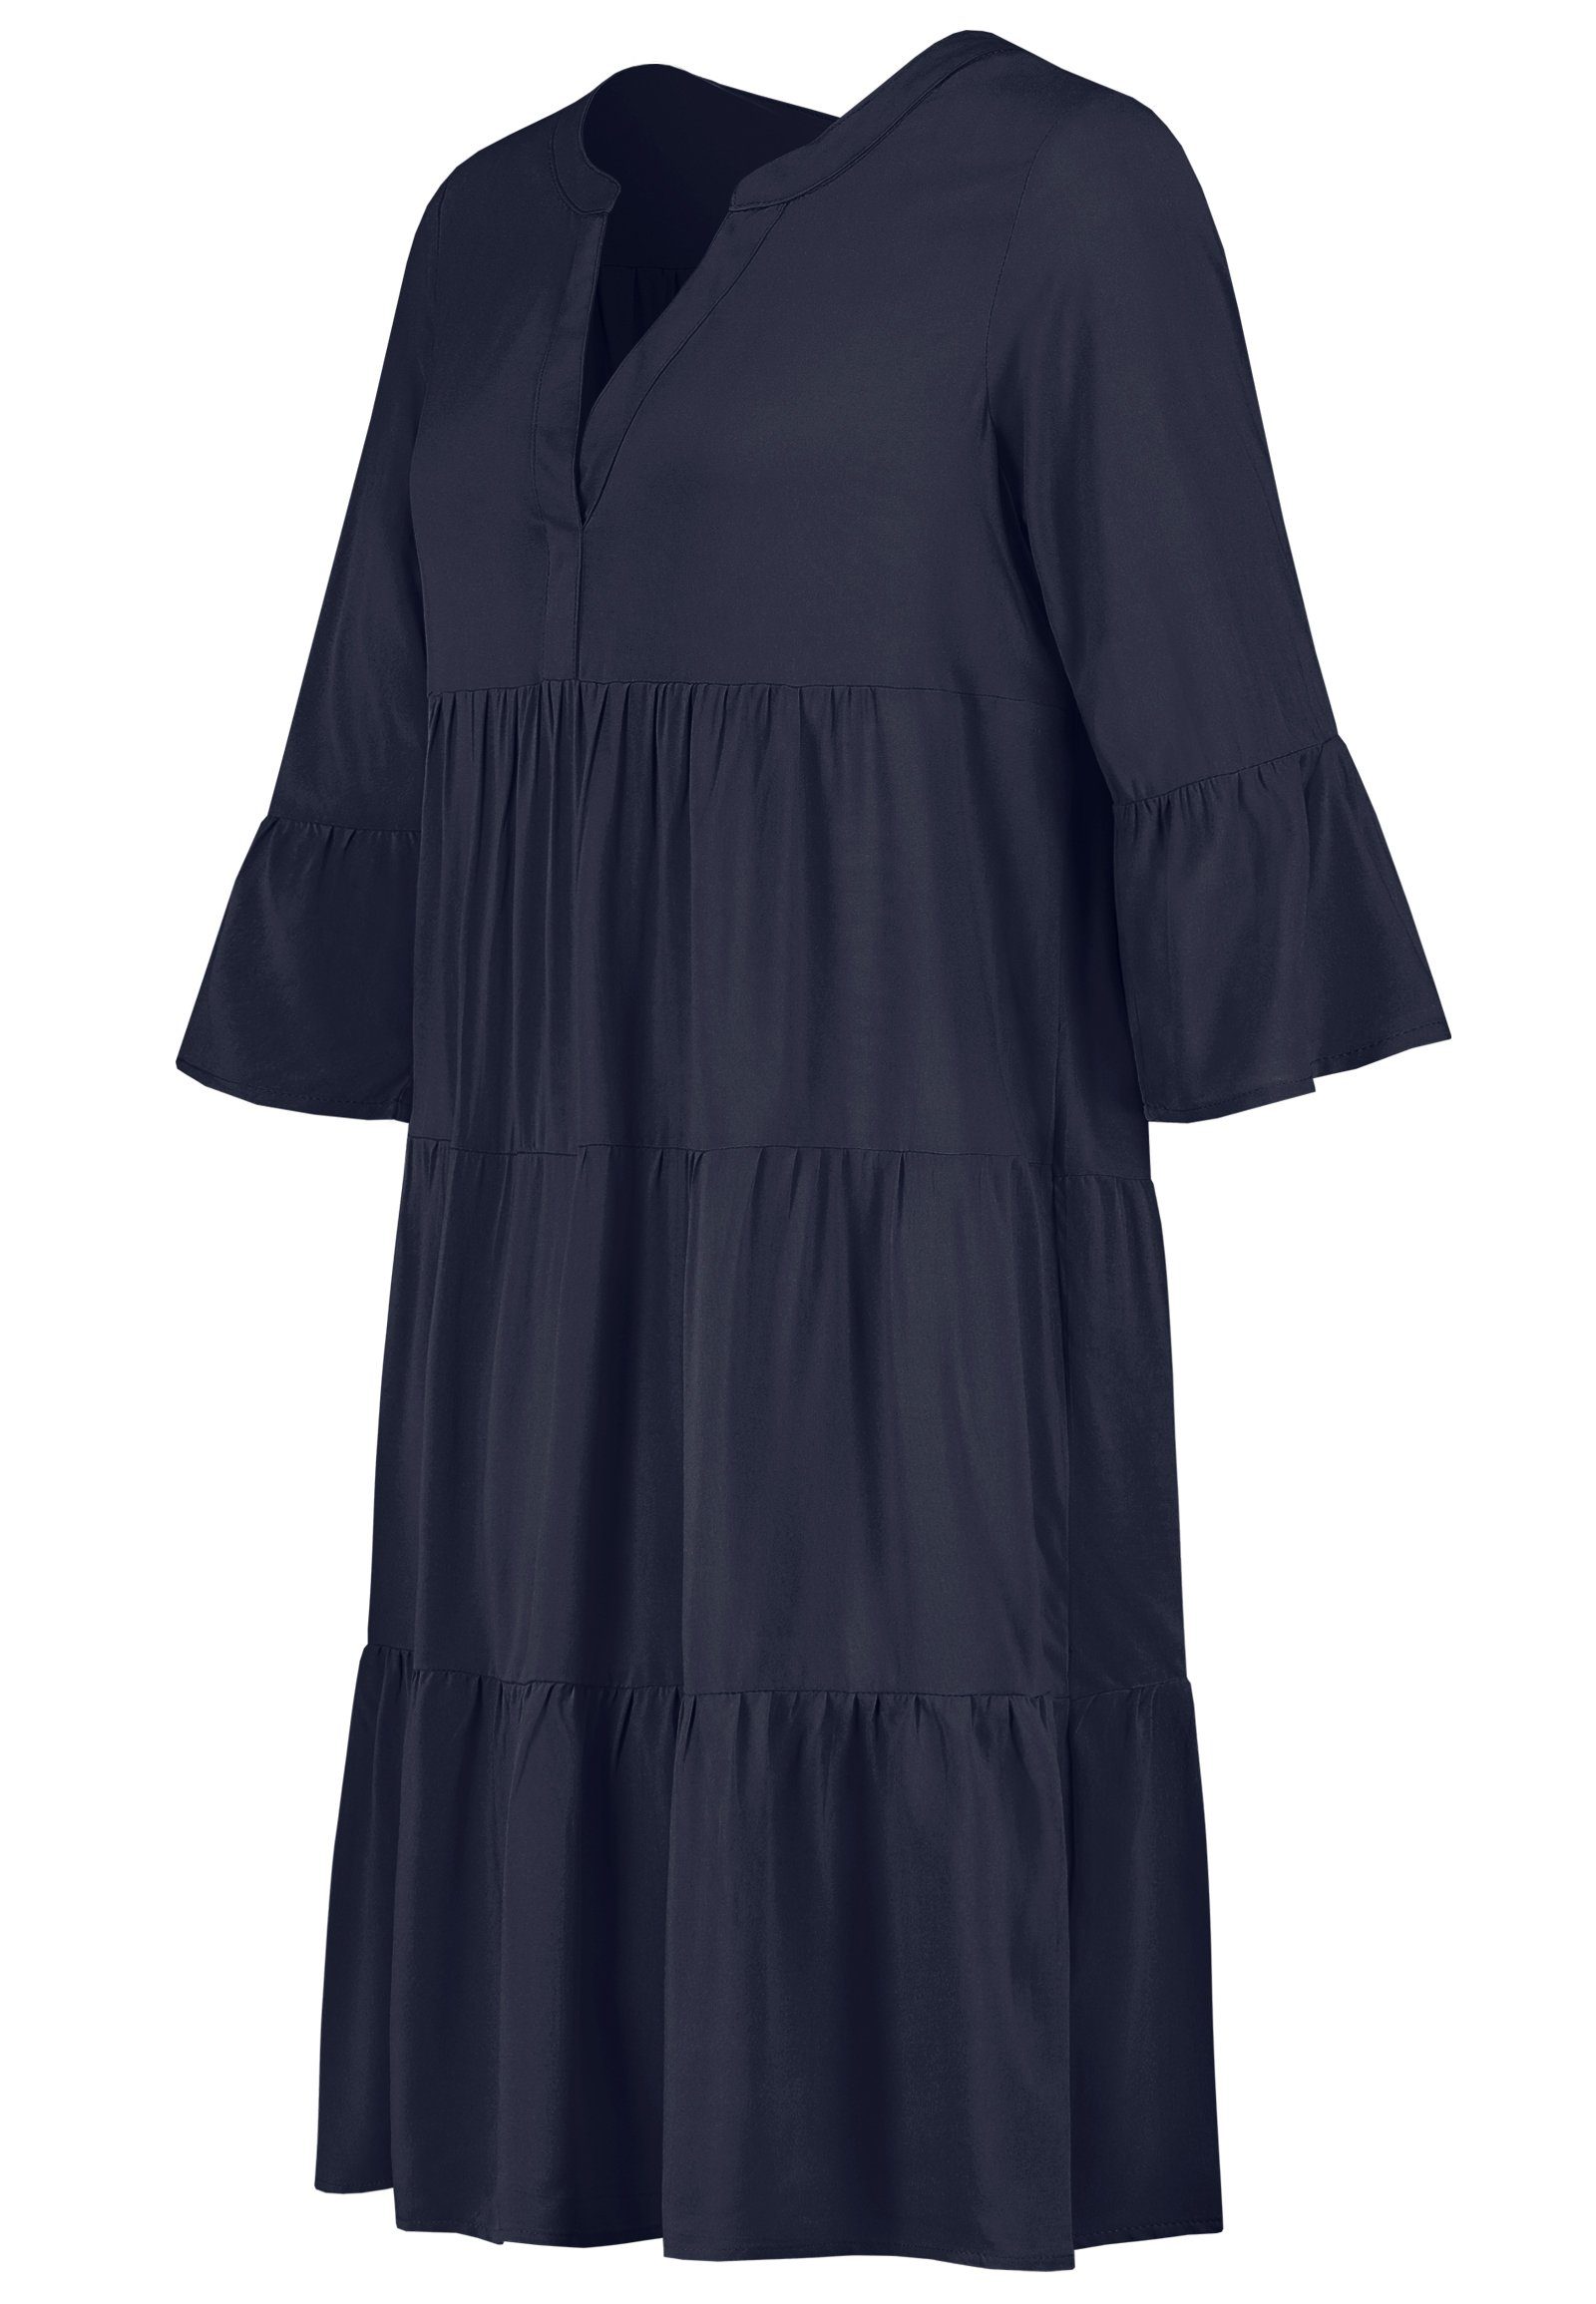 SUBLEVEL Strandkleid Sublevel Damen Kleid MIT Sommerkleid VOLANTS Strandkleid Navy Viskose 100